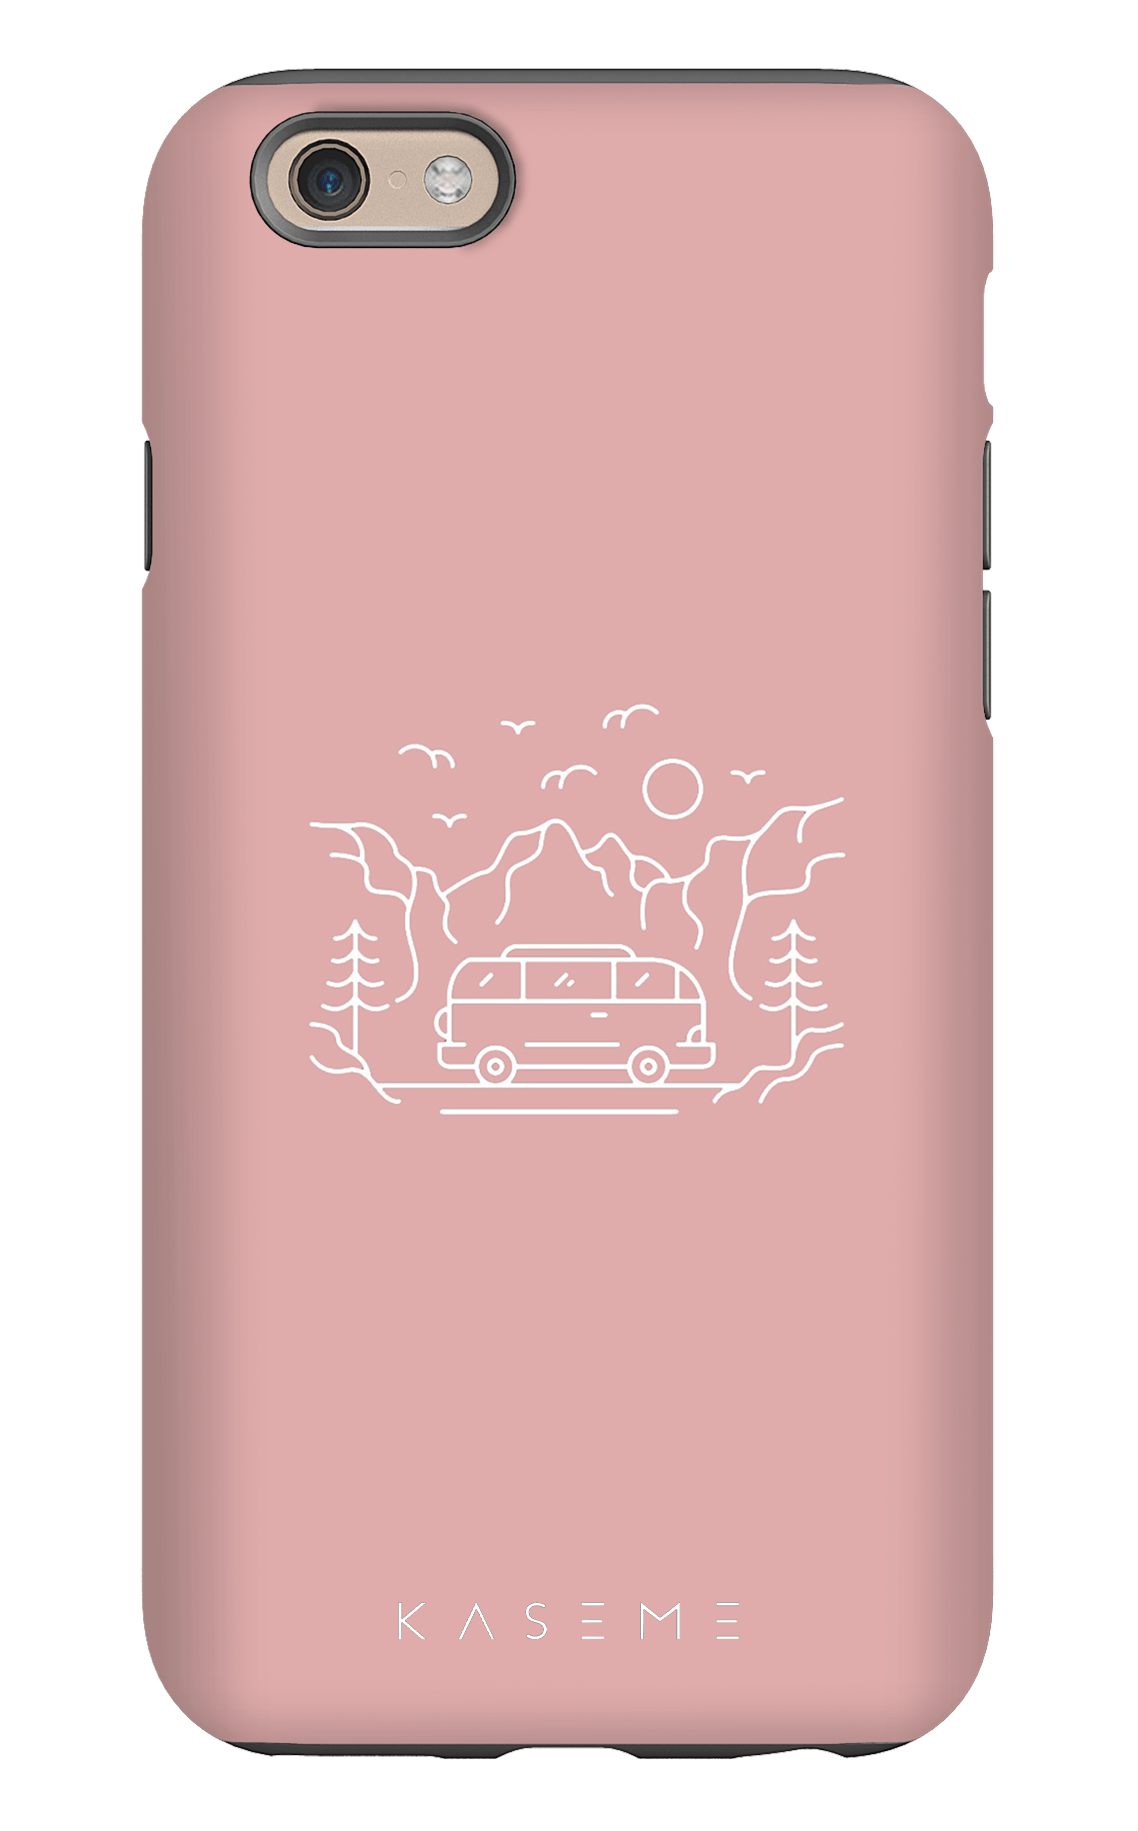 Camp life pink - iPhone 6/6s